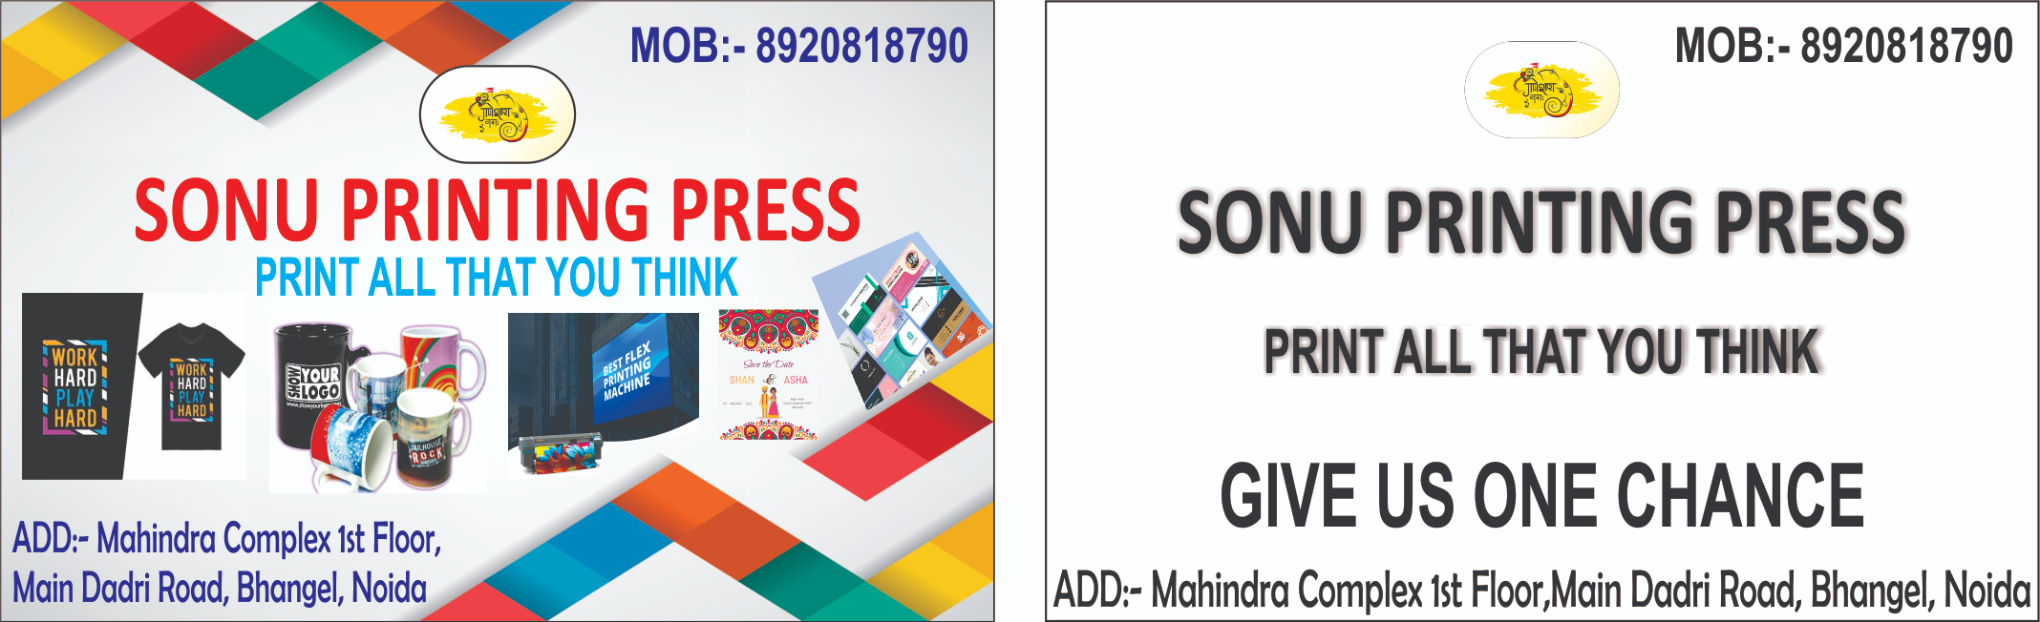 Sonu Printing Press